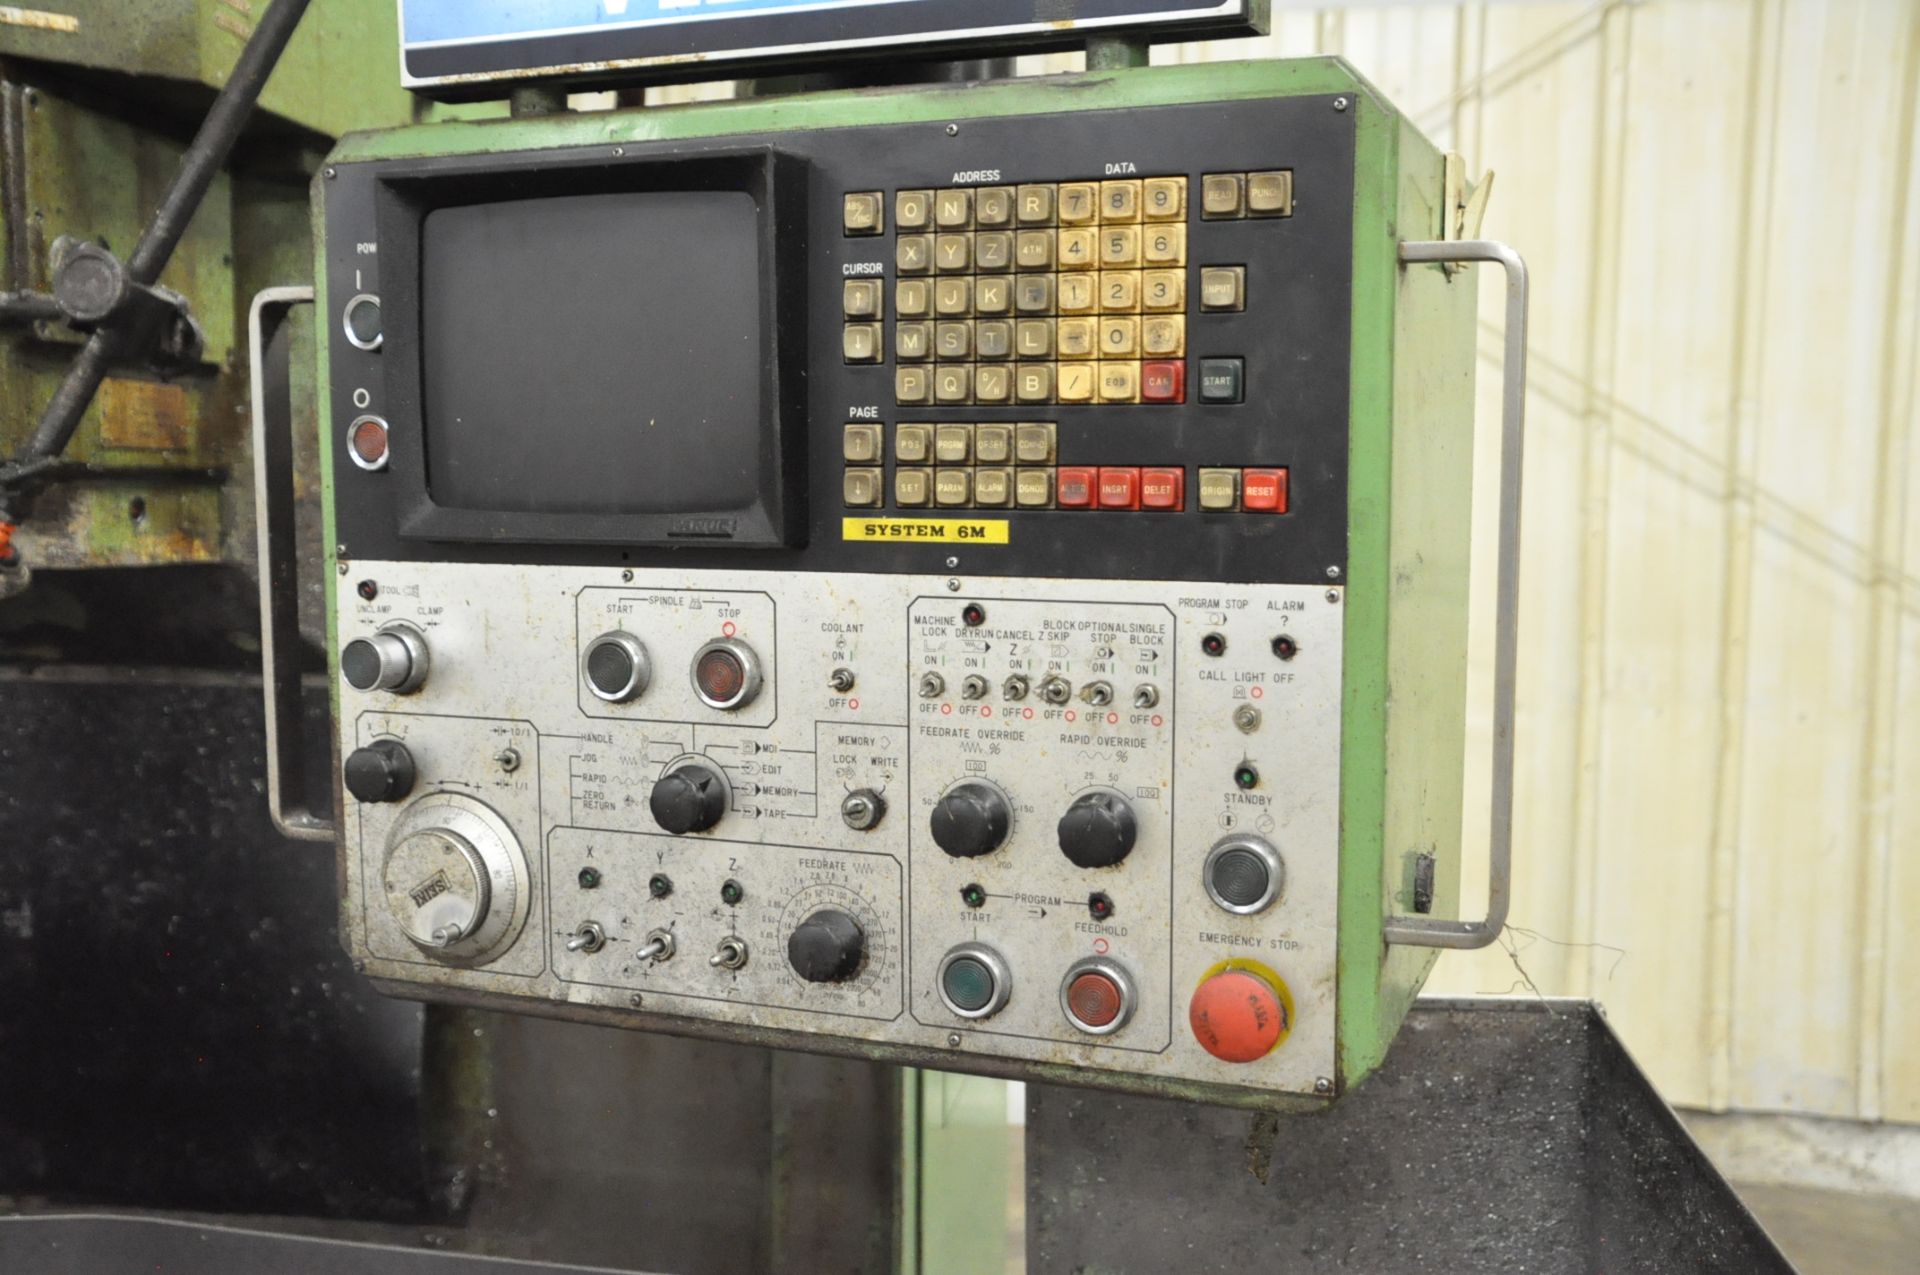 Hitachi Seiki Model VA40, CNC Vertical Machining Center, S/n VA-4222, System 6M CNC Controller, 25- - Image 4 of 11